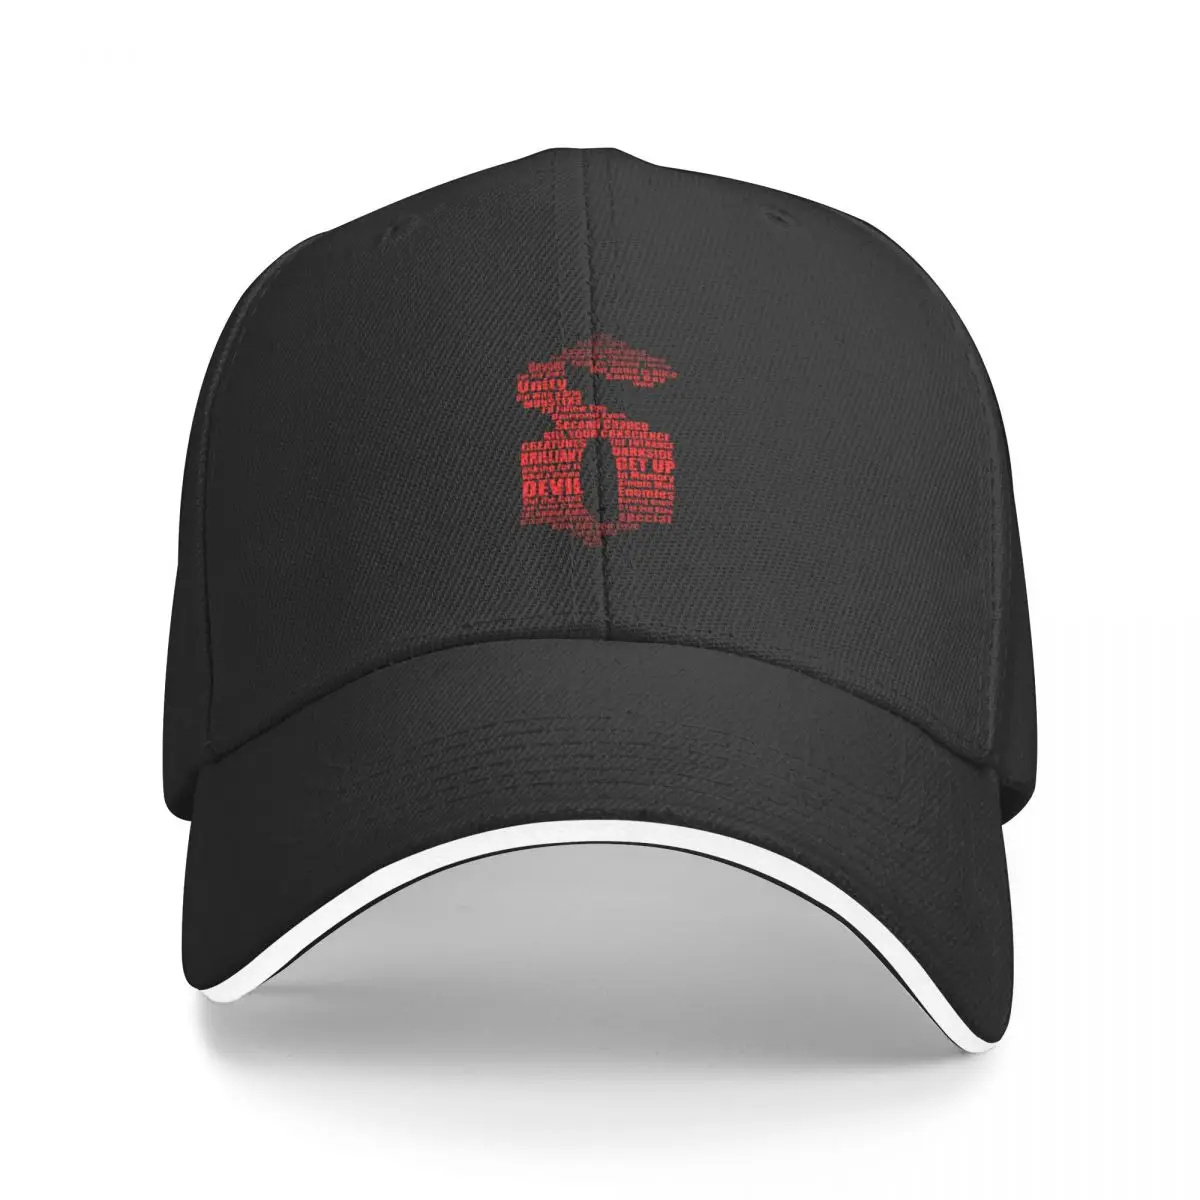 

shinedown MR2 shinedown - band - music sell essential t-shirt Cap Baseball Cap Rugby bucket hat Women caps Men's